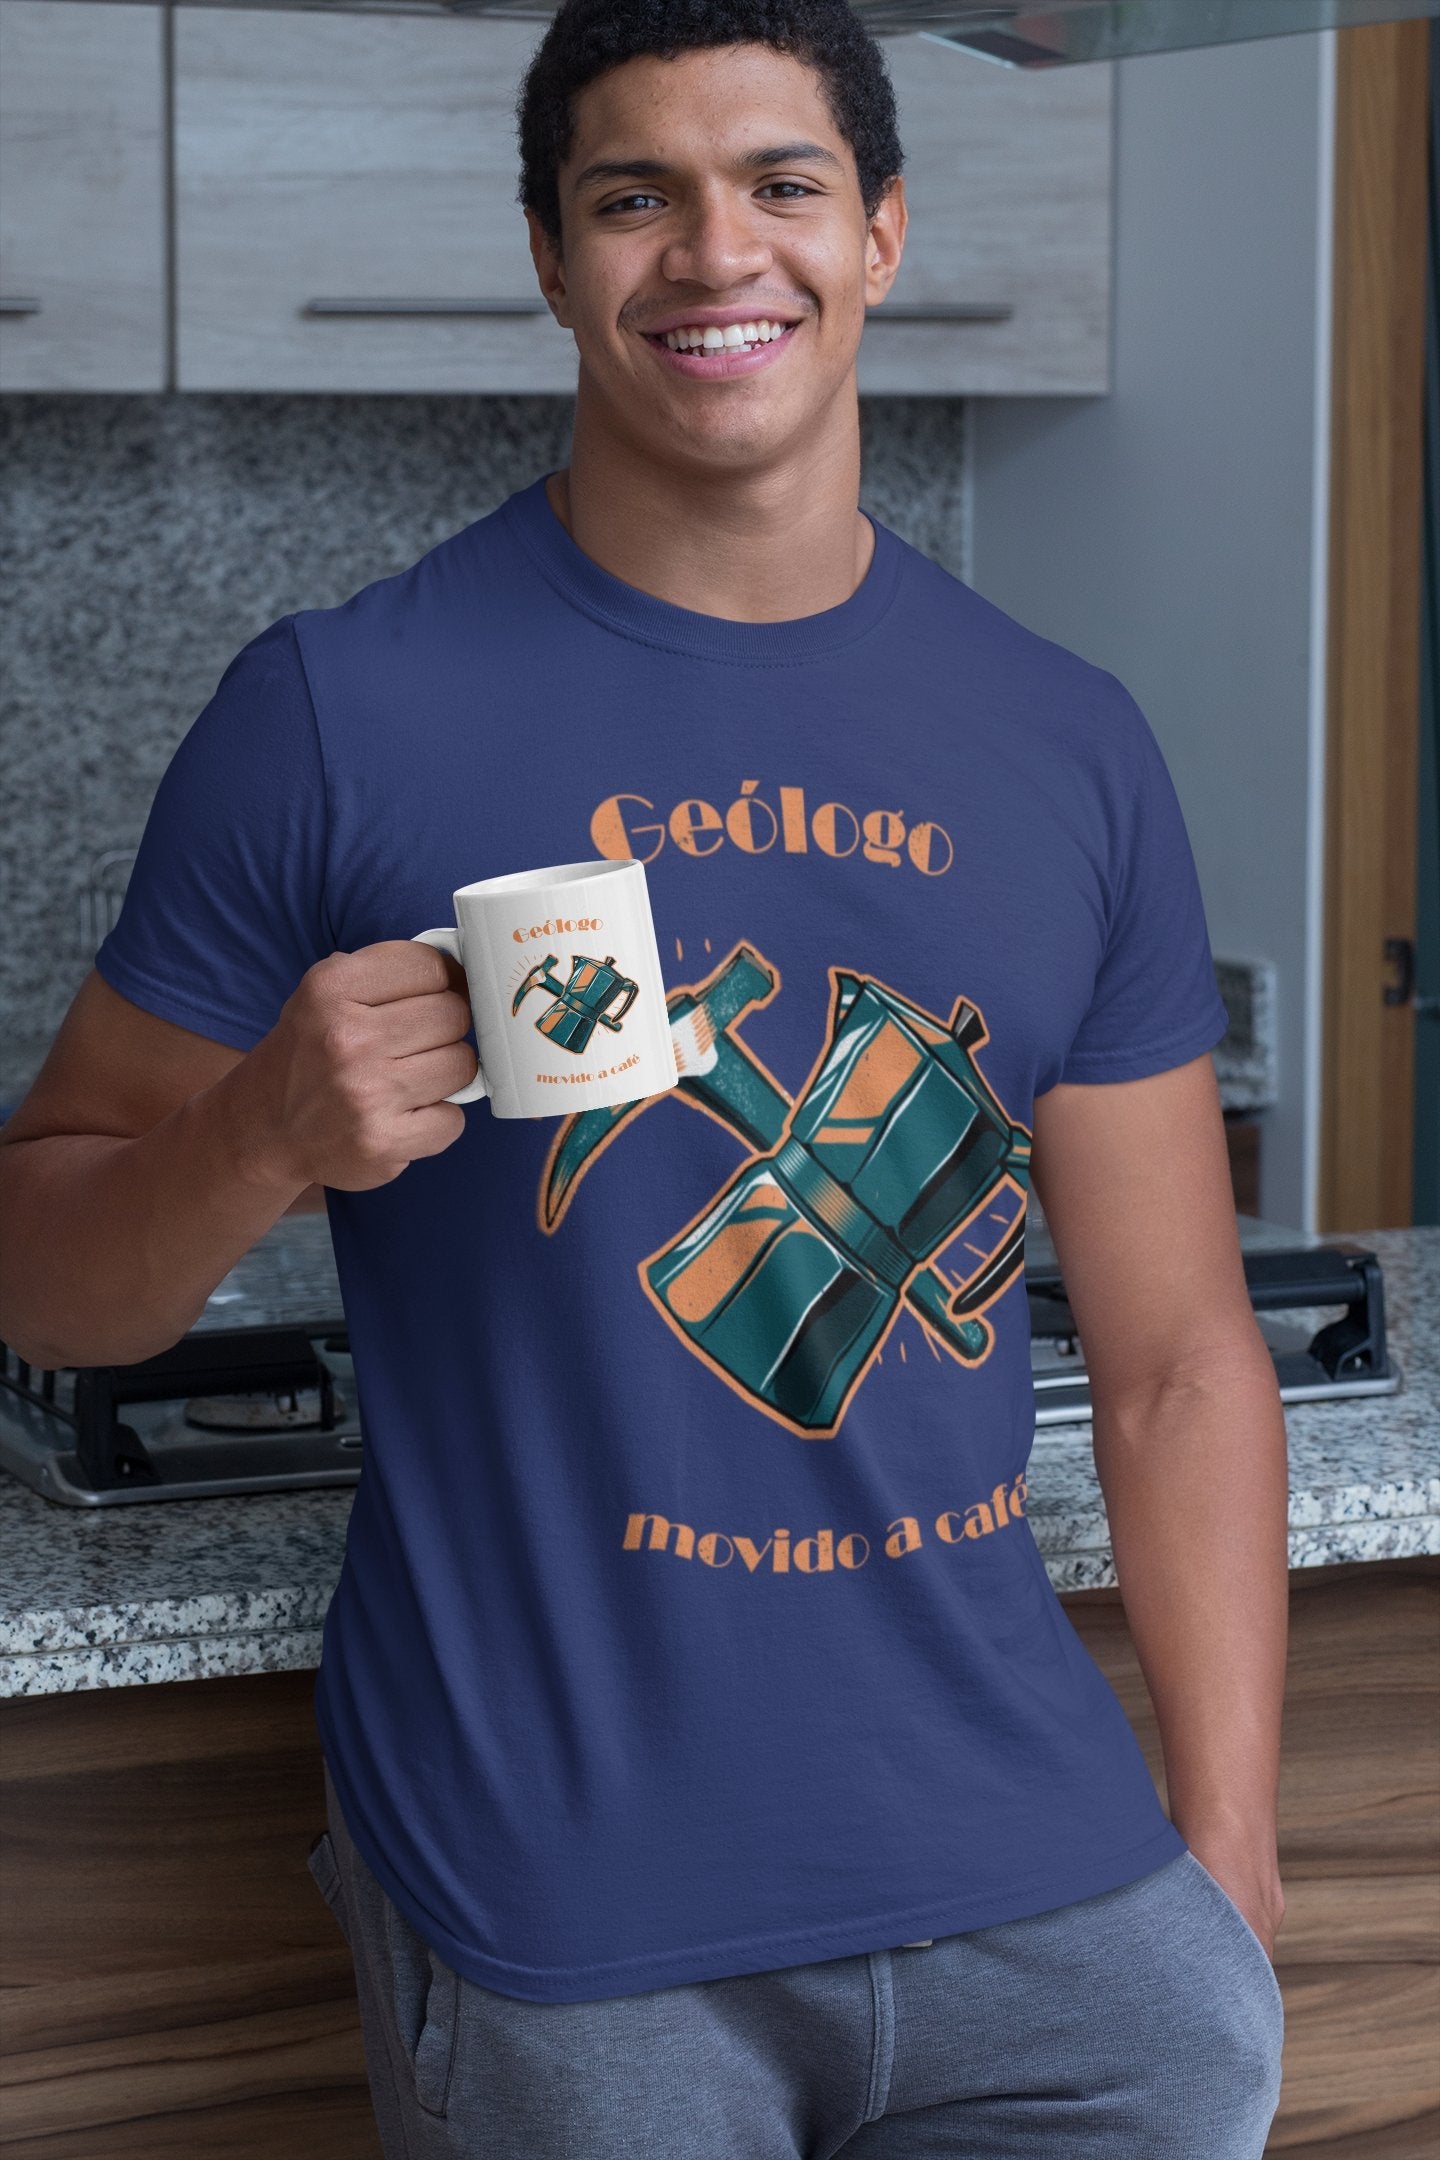 Camiseta Geólogo Movido a Café - Masculino -camiseta- Editora Datum